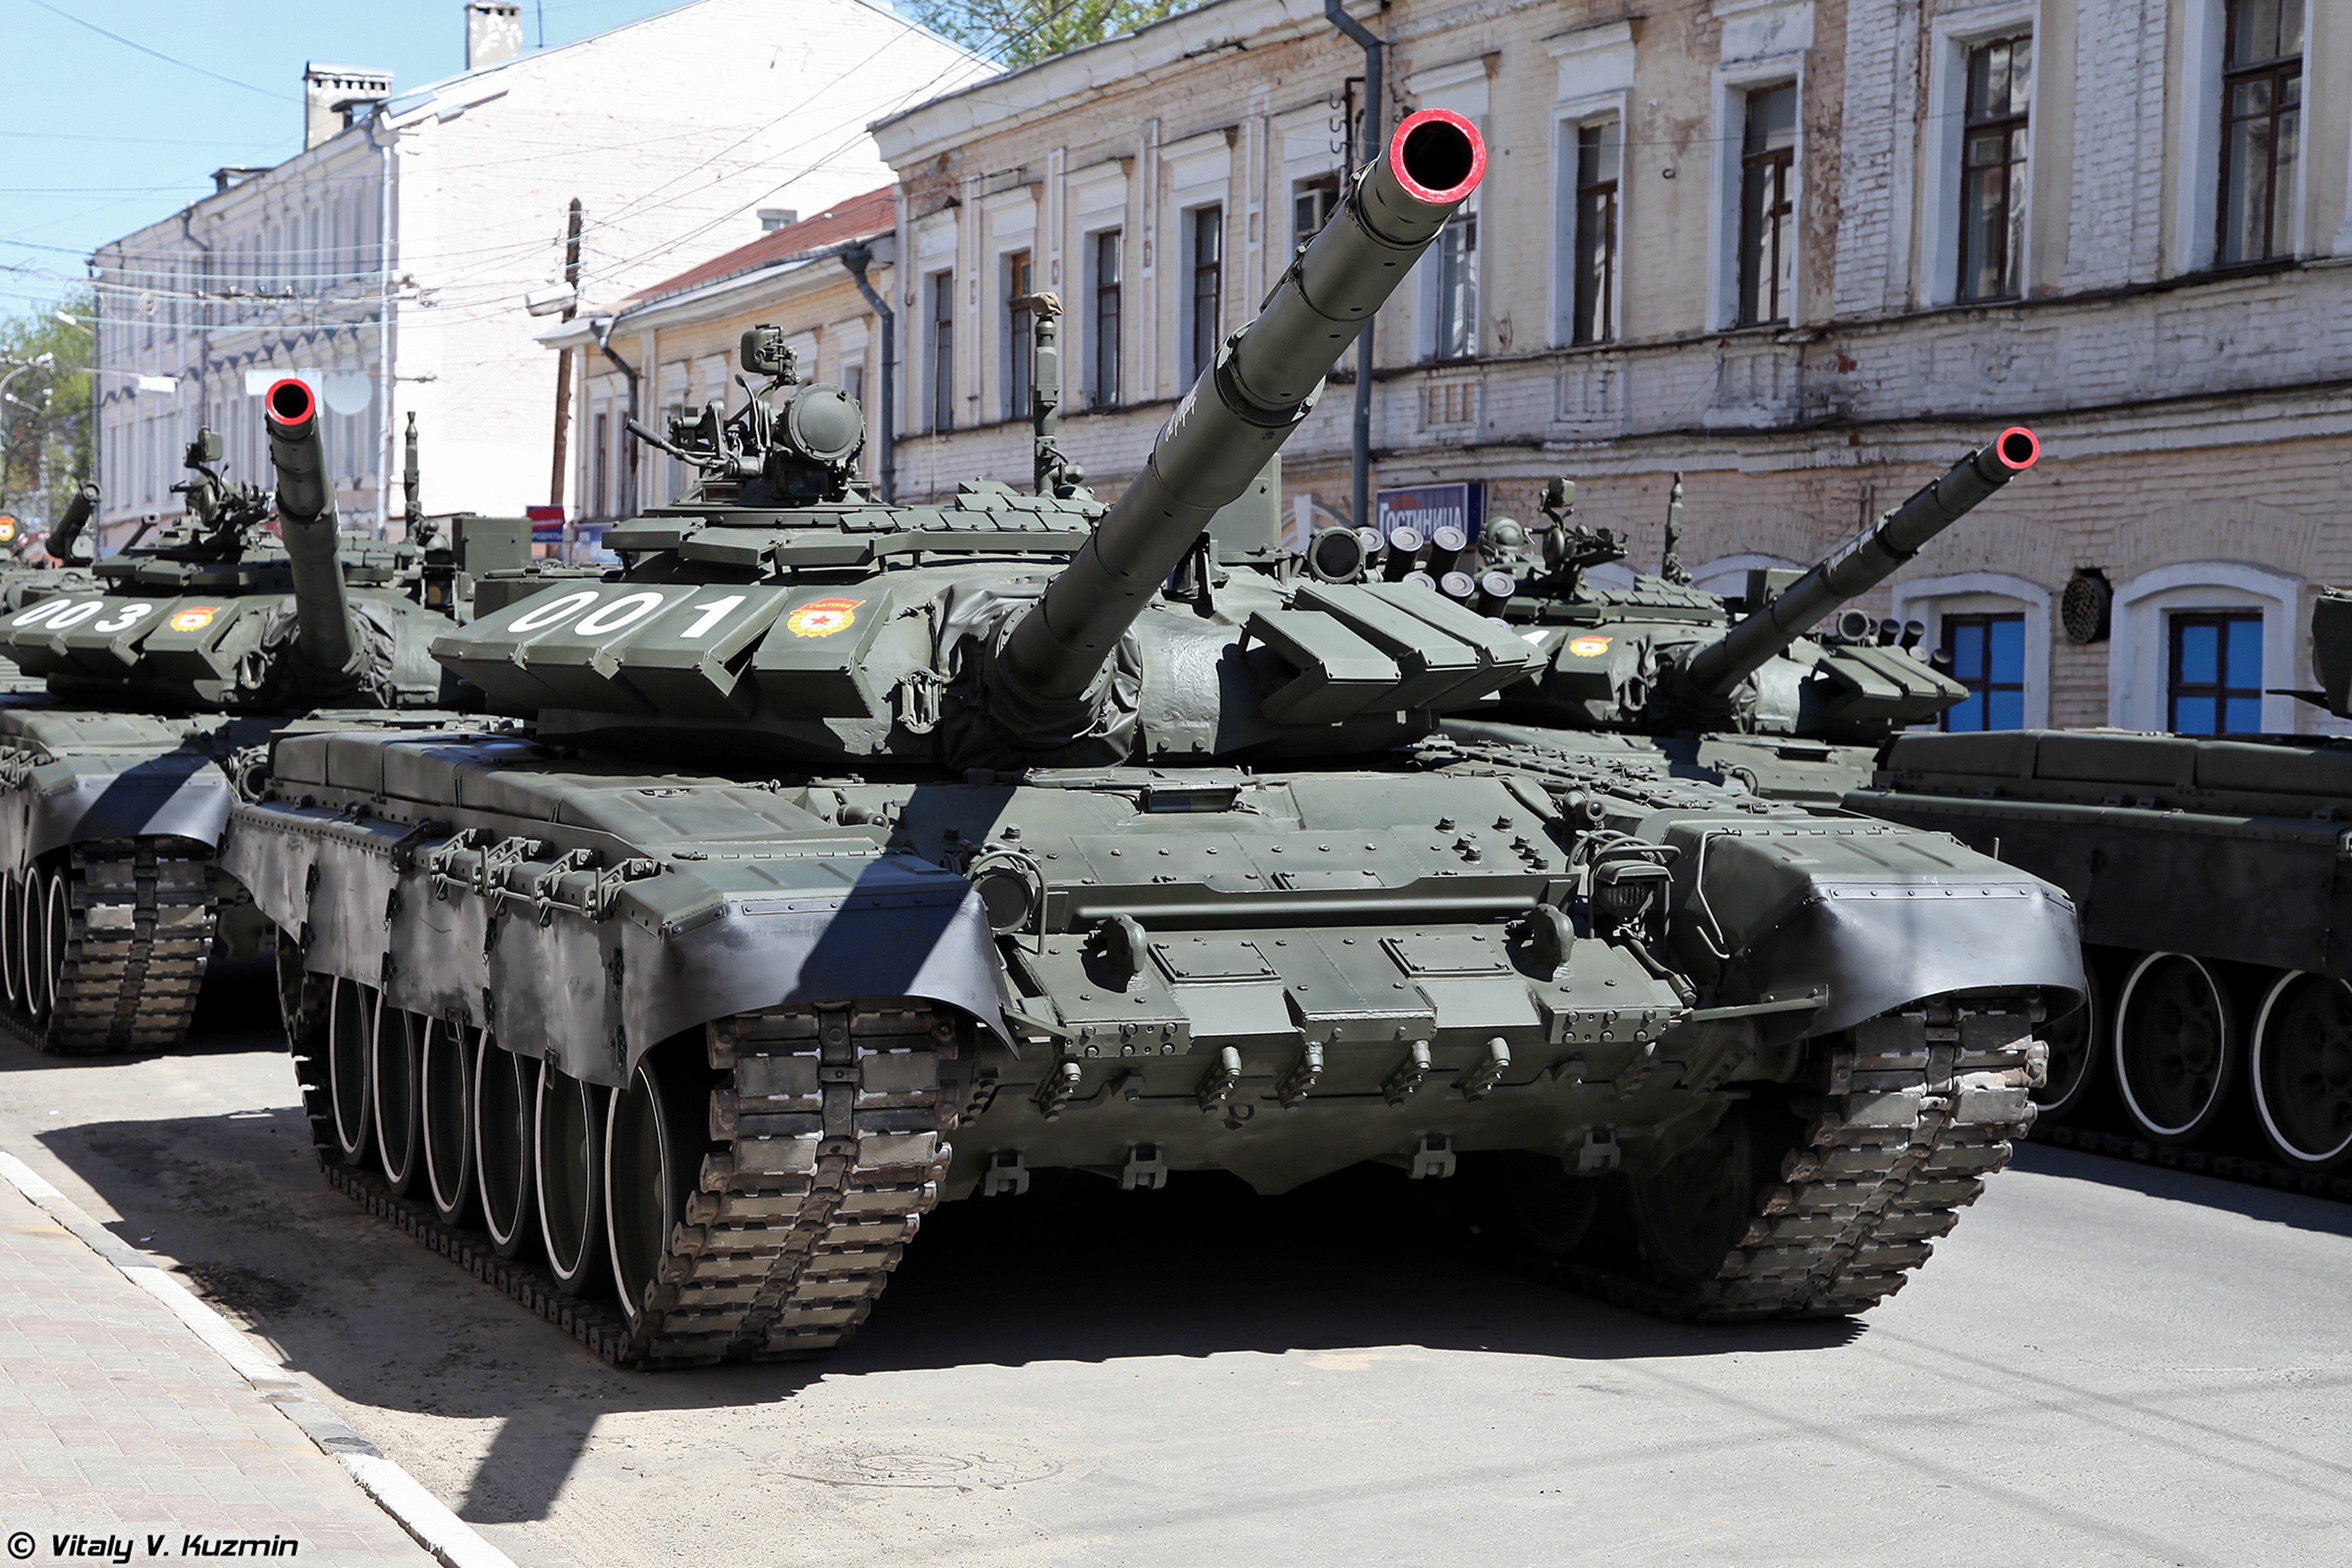 modern russian tanks & apc stephen hart